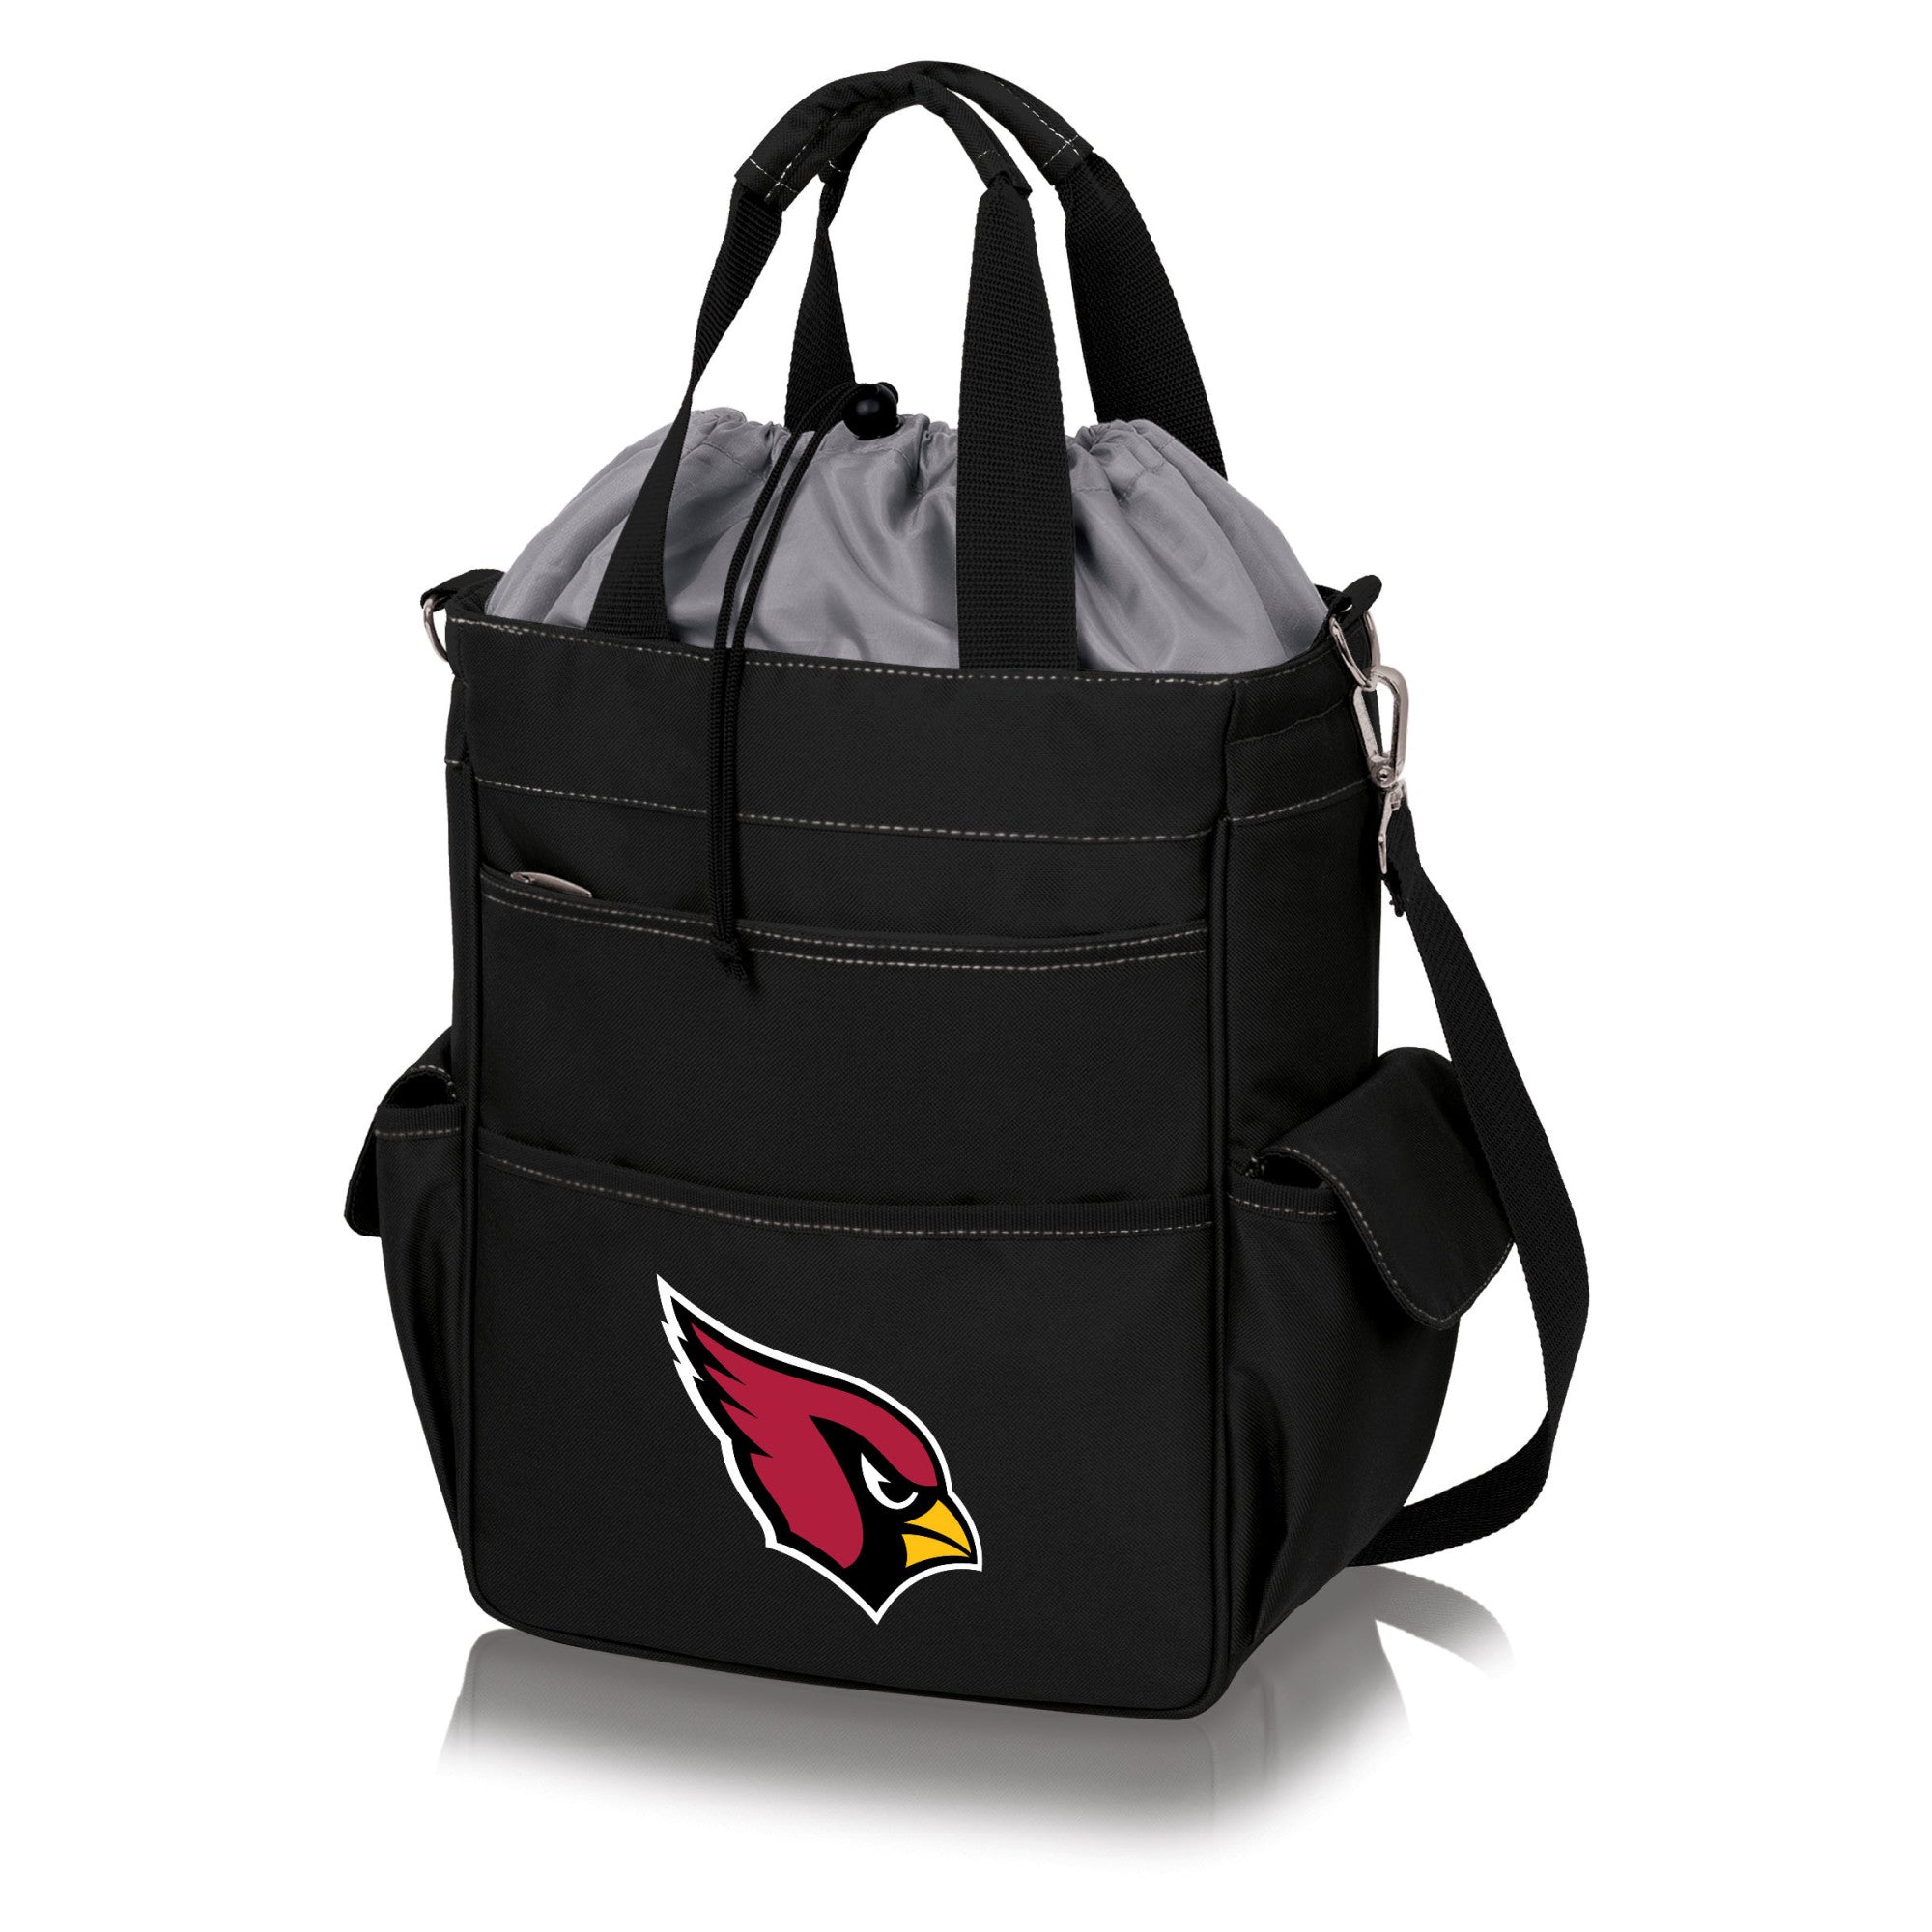 Picnic Time - Arizona cardinals - activo cooler tote bag, (black with gray accents)